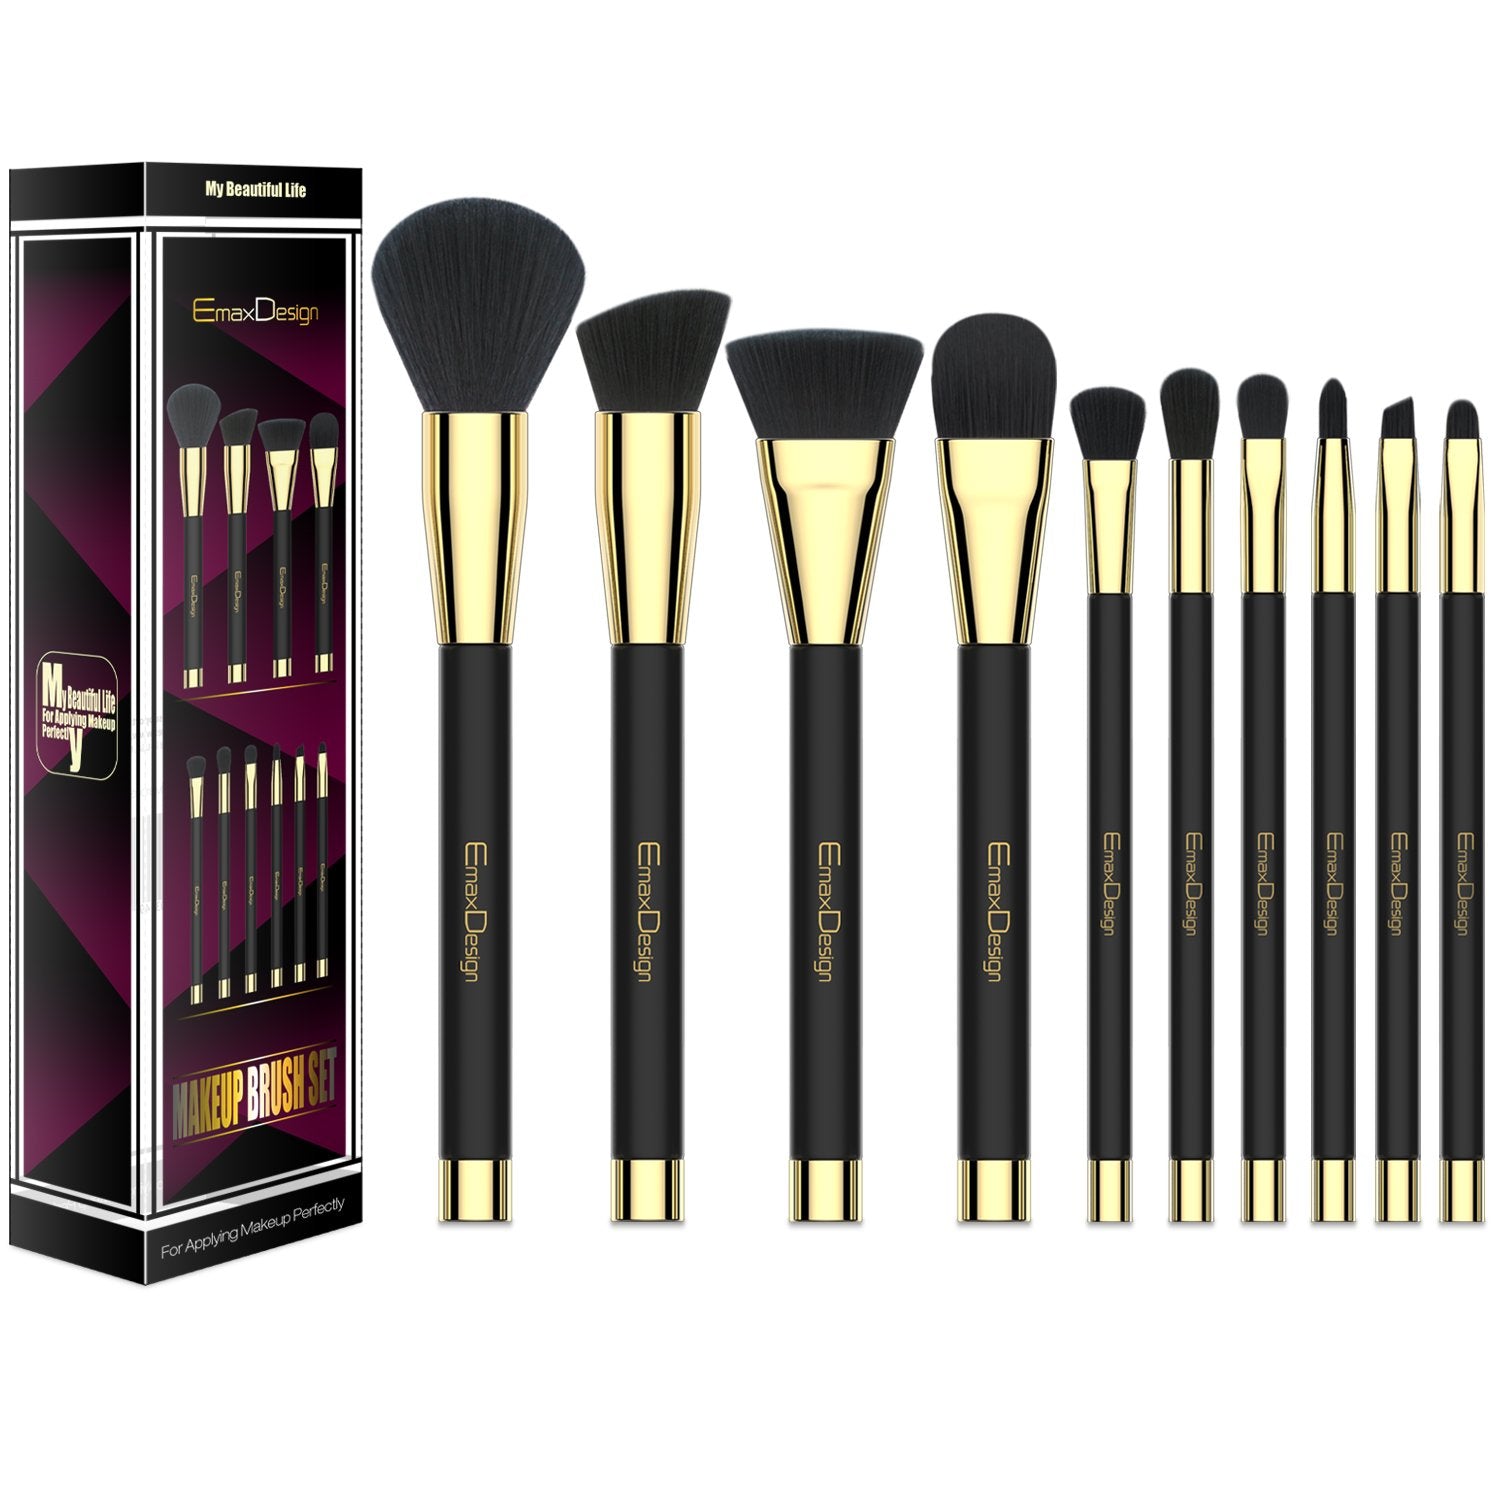 EmaxDesign 10 Pieces Makeup Brush Set Professional Foundation Eyeshadow Brow Blush Cosmetics Brushes tool Kit